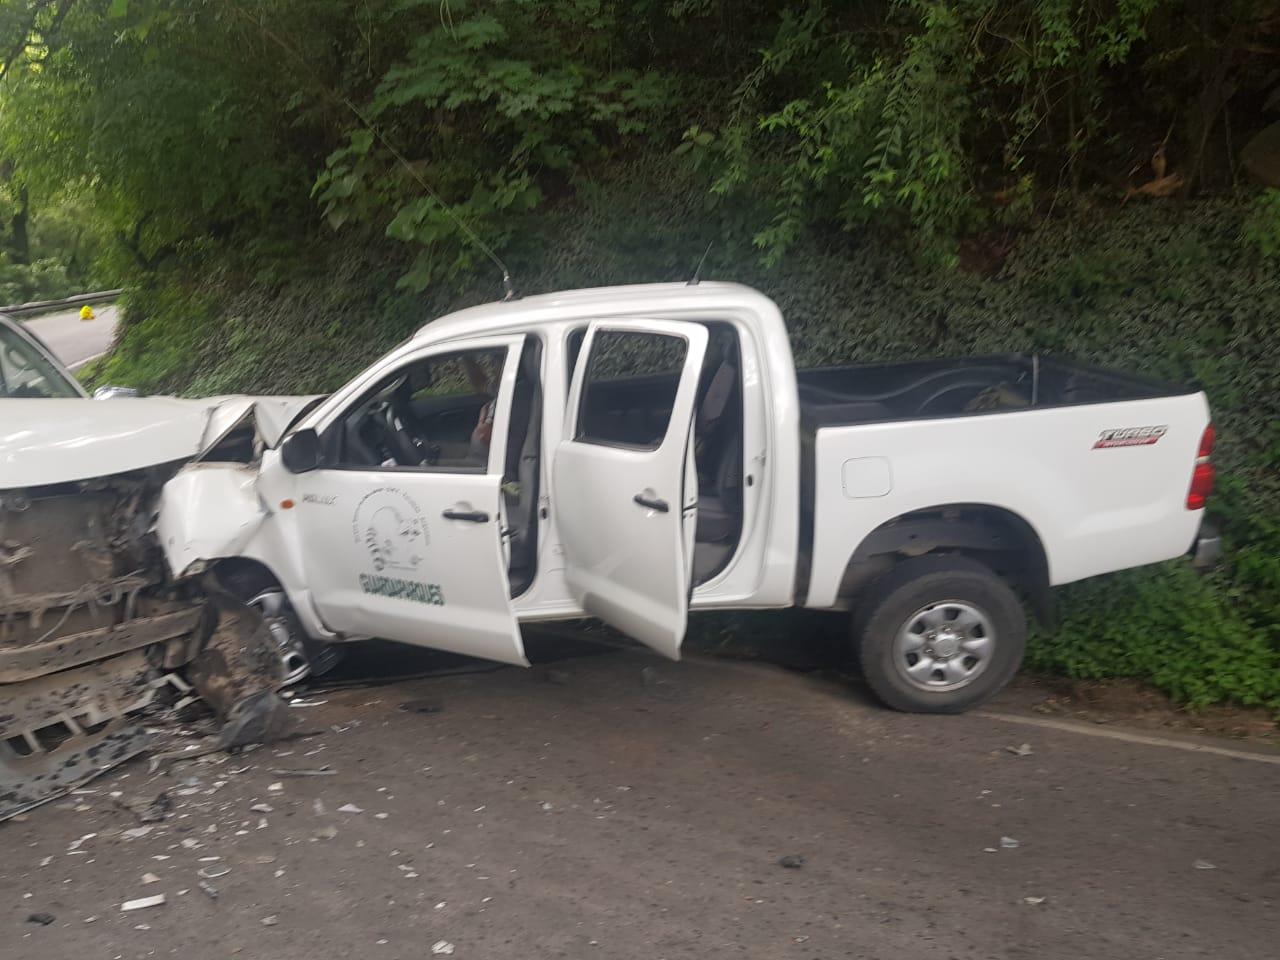 Dos camionetas chocaron de frente camino al cerro San Javier